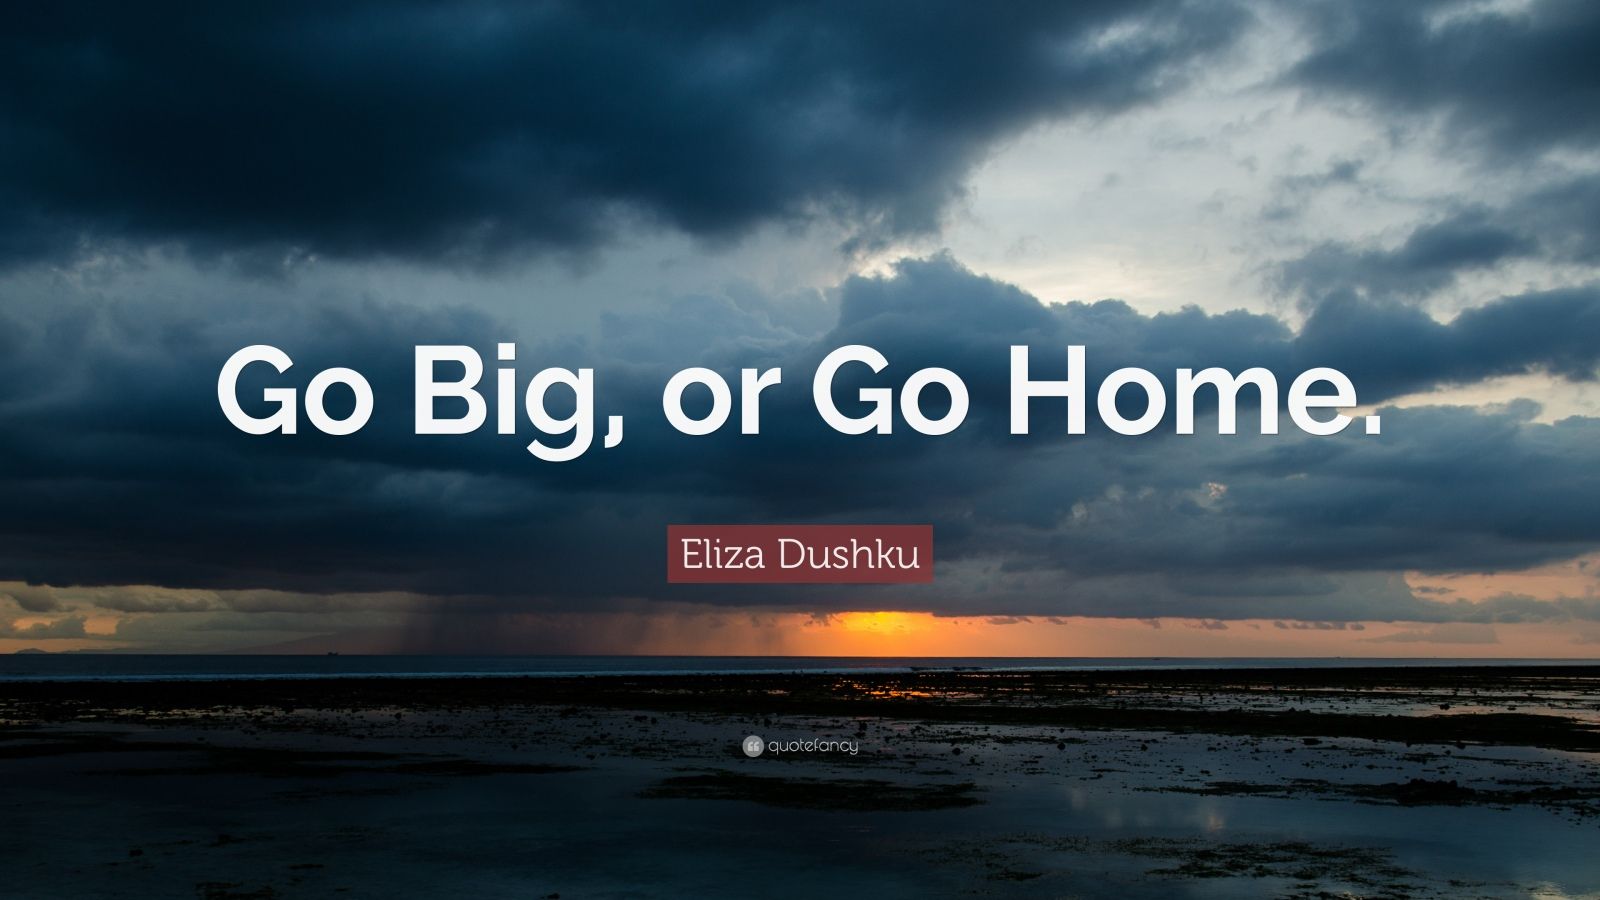 Go Big Or Go Home Origin Eliza Dushku Quote: “Go Big, or Go Home.” (22 wallpapers) - Quotefancy